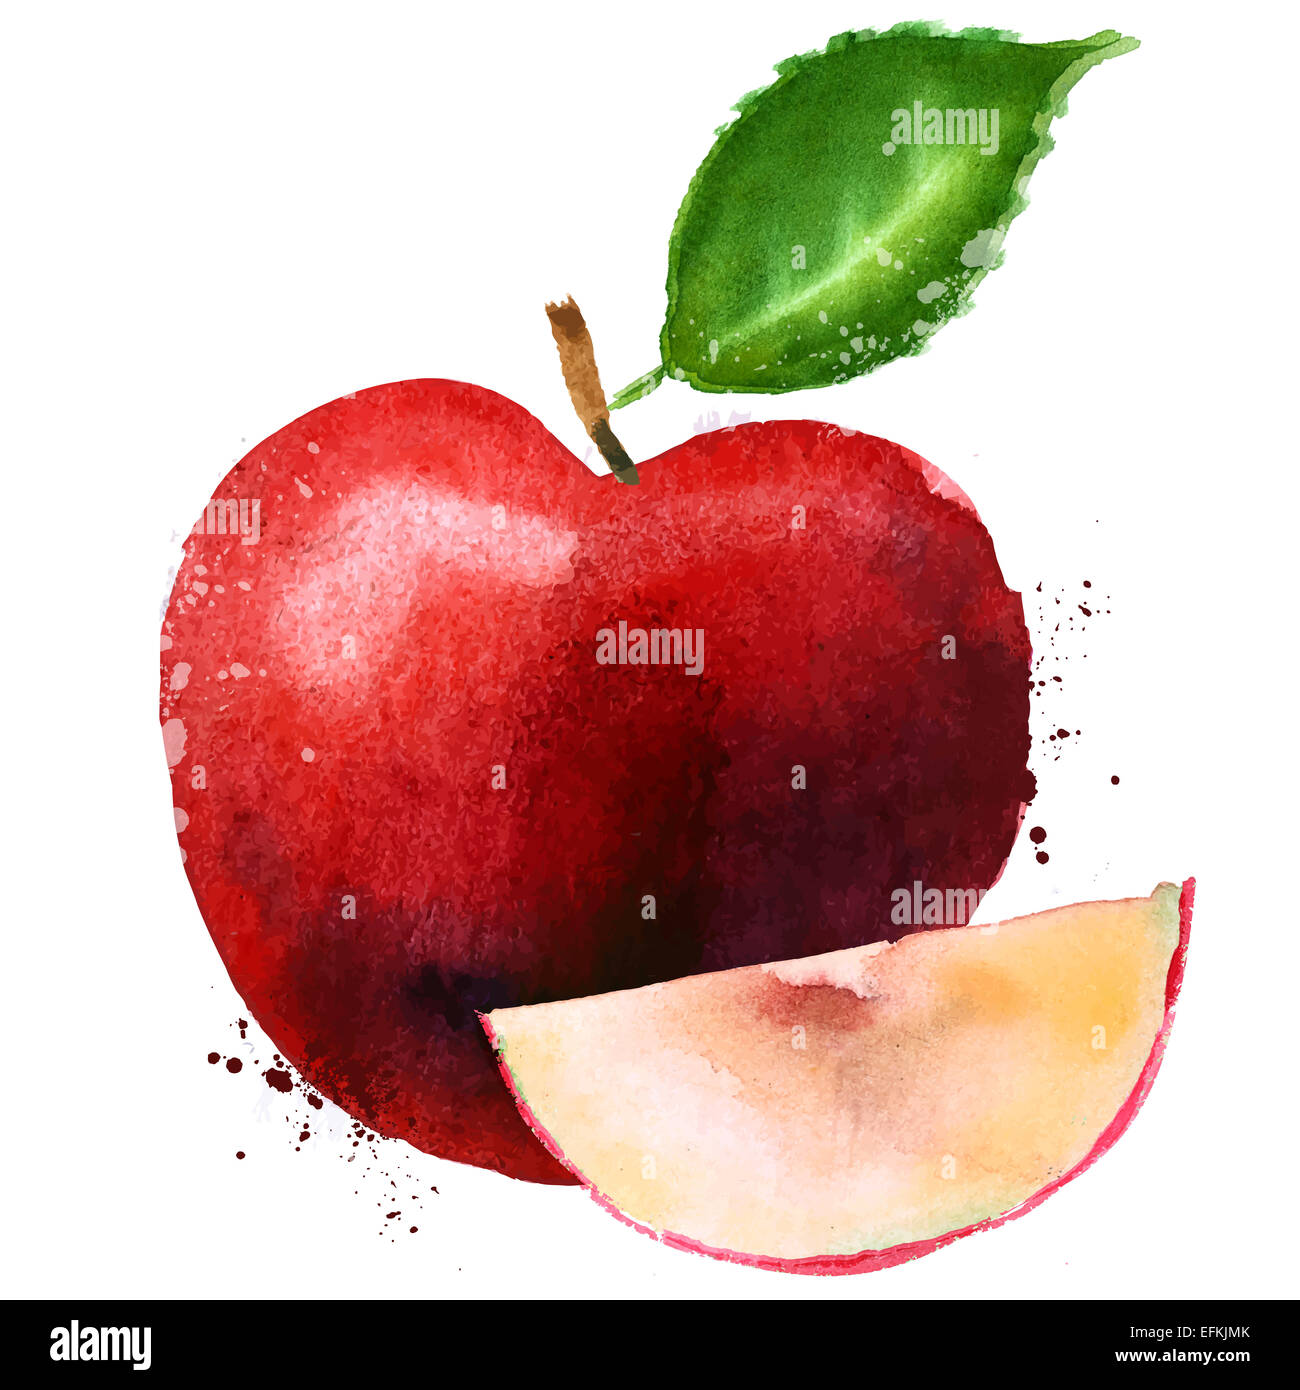 Apple fruit design Royalty Free Vector Image - VectorStock